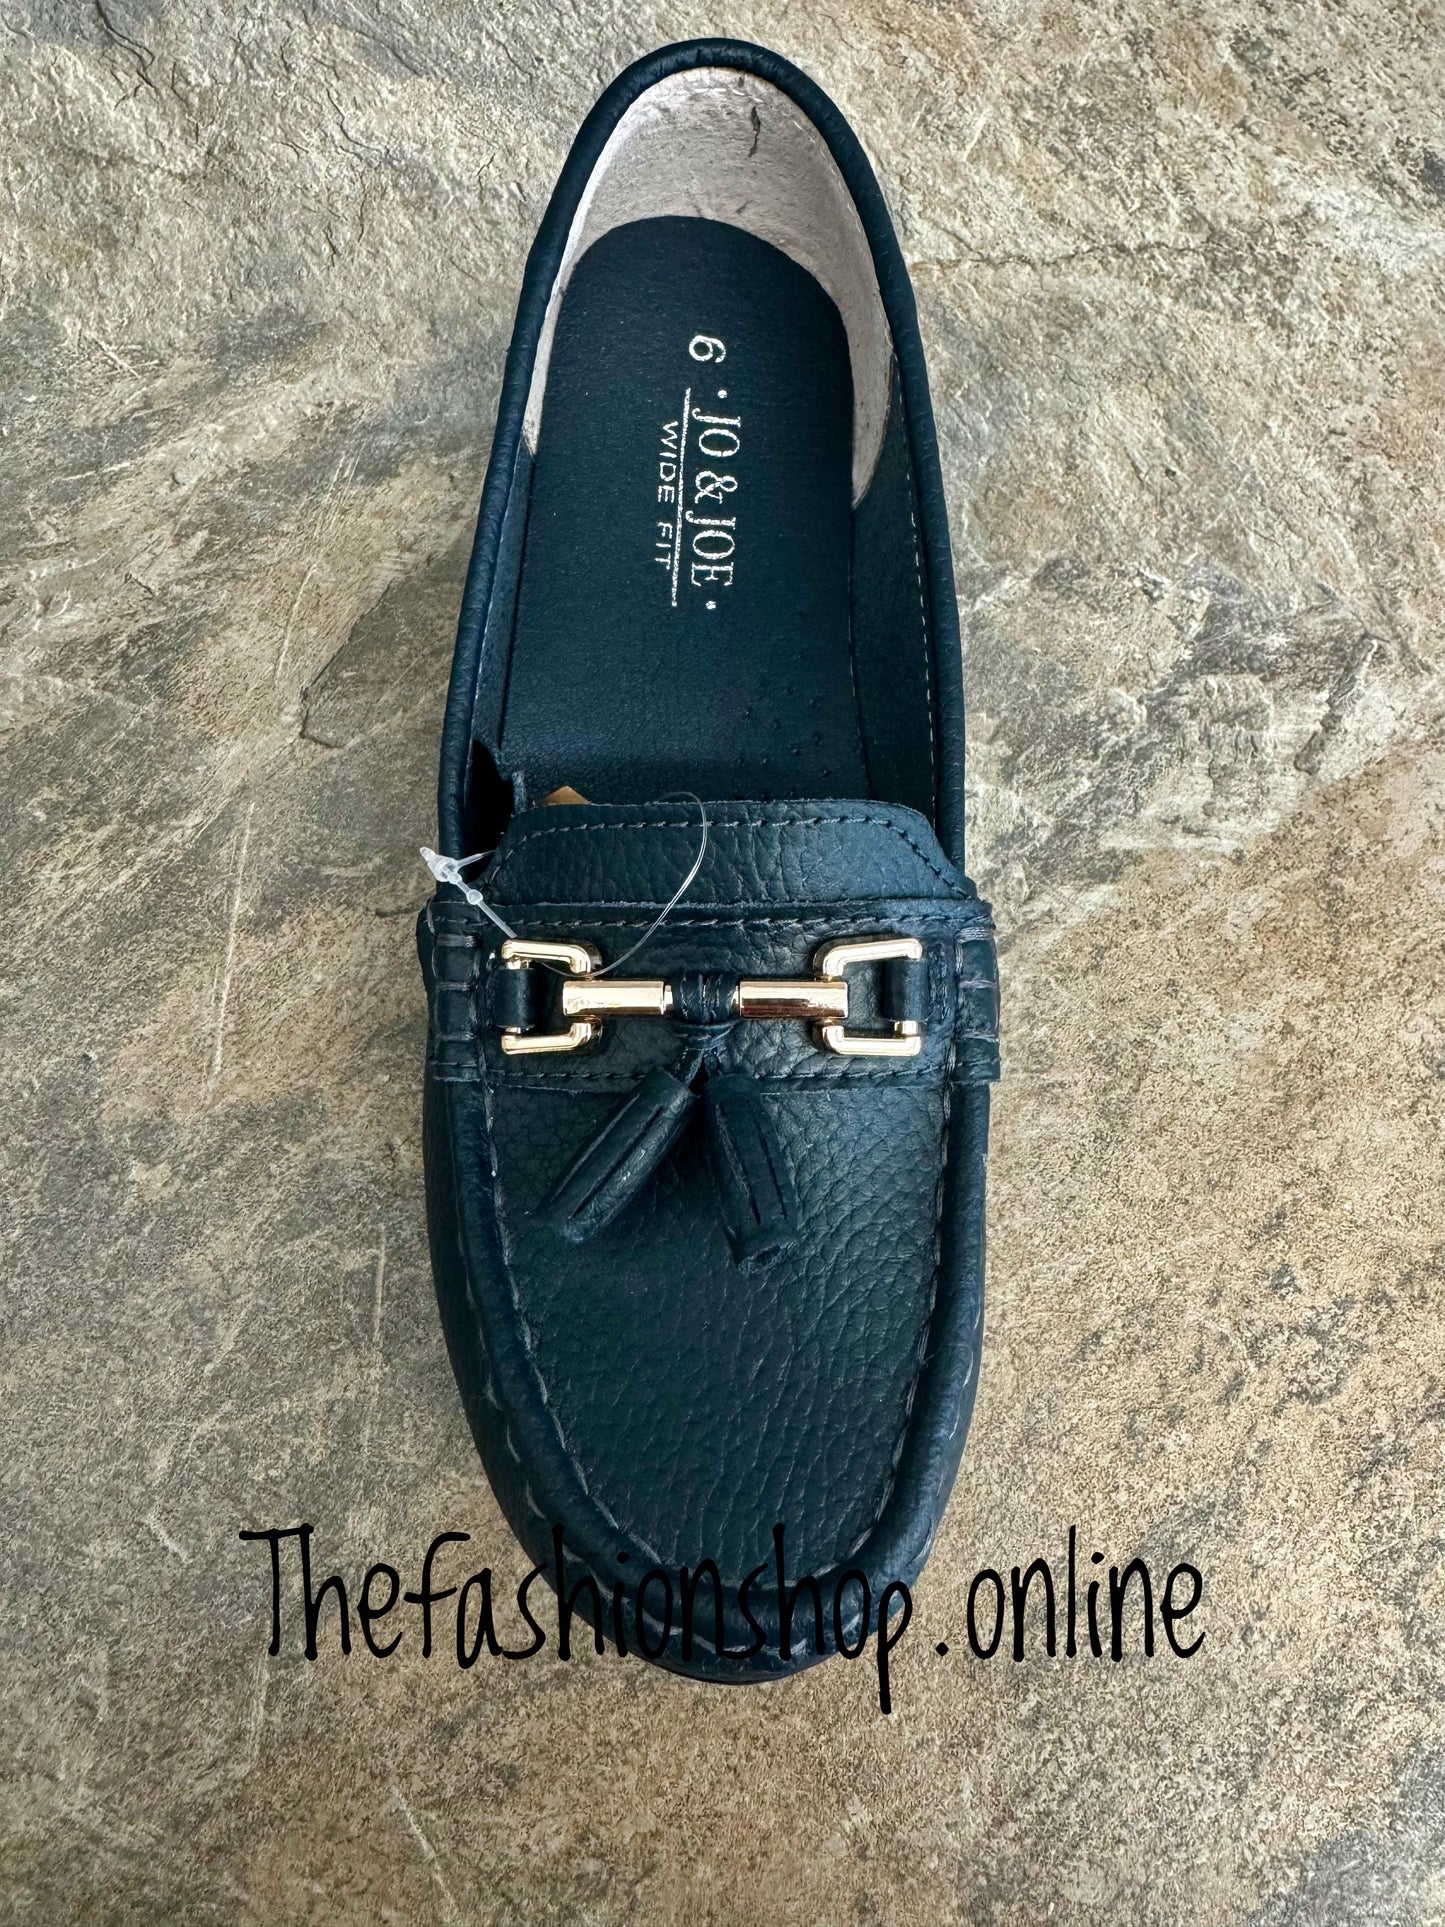 Jo & Joe Nautical wide fit dark navy leather loafer sizes 4-8